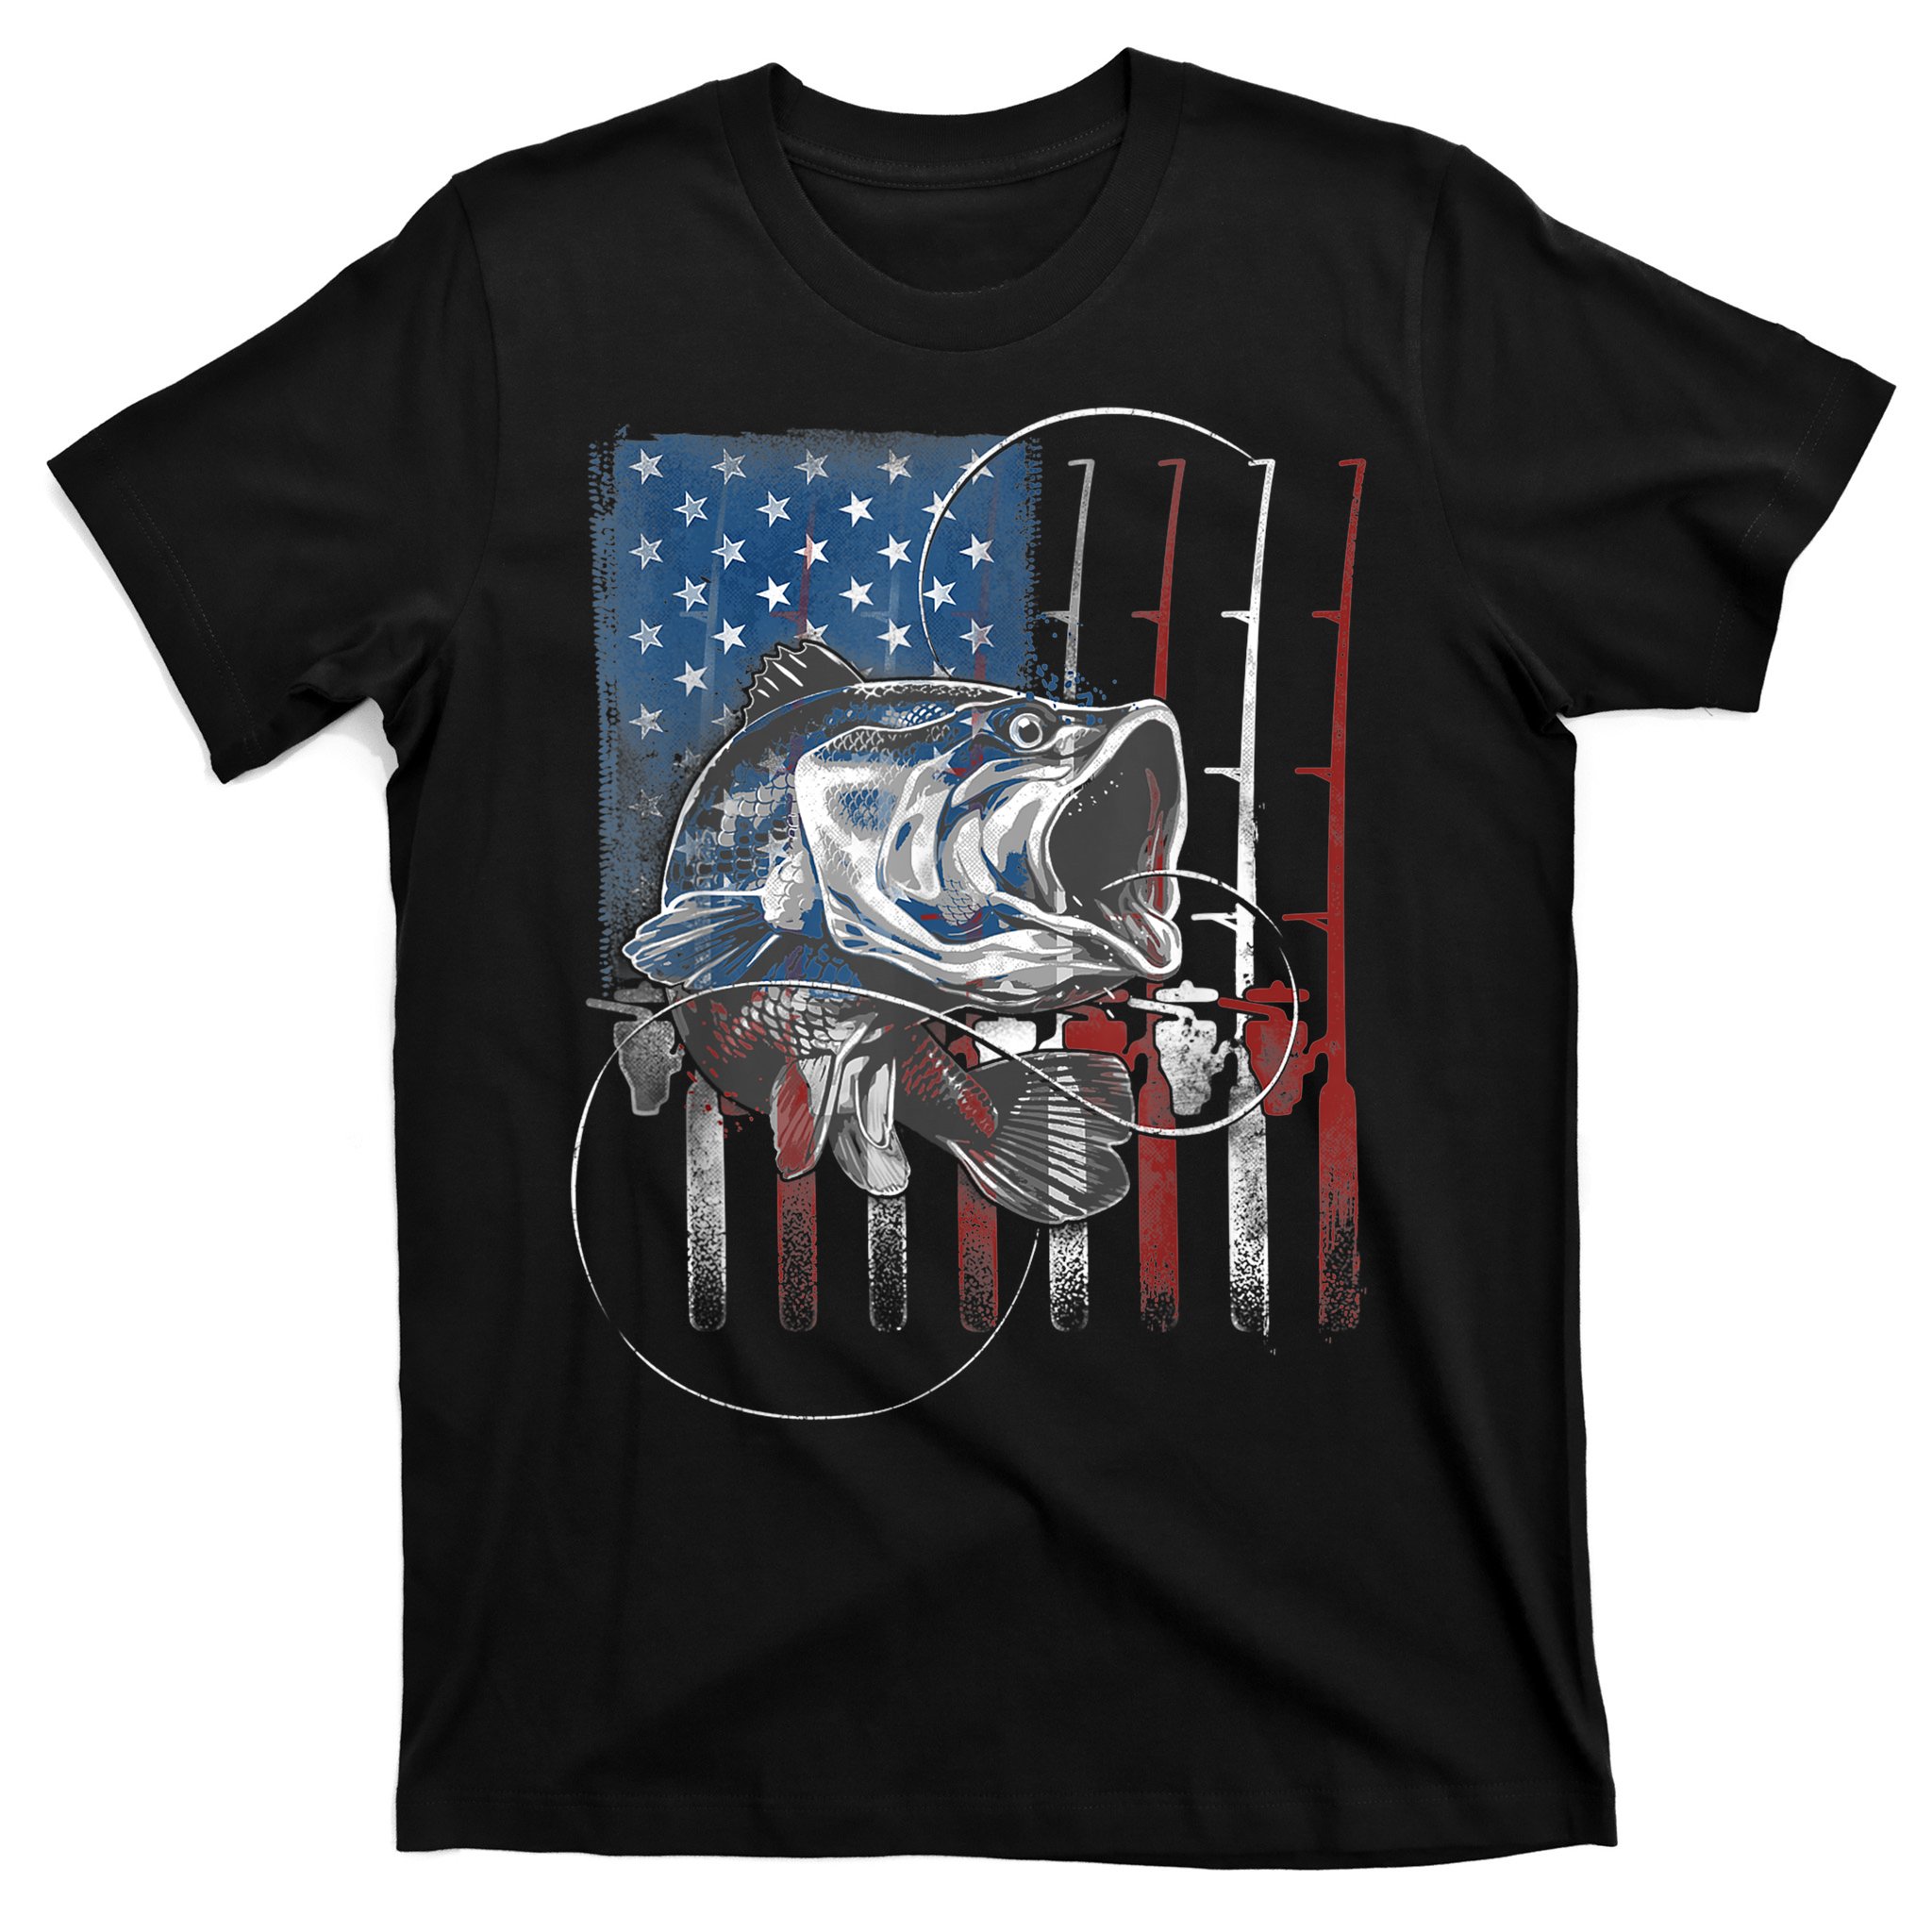 American Flag Bass Fishing Custom long sleeve Fishing Shirts for